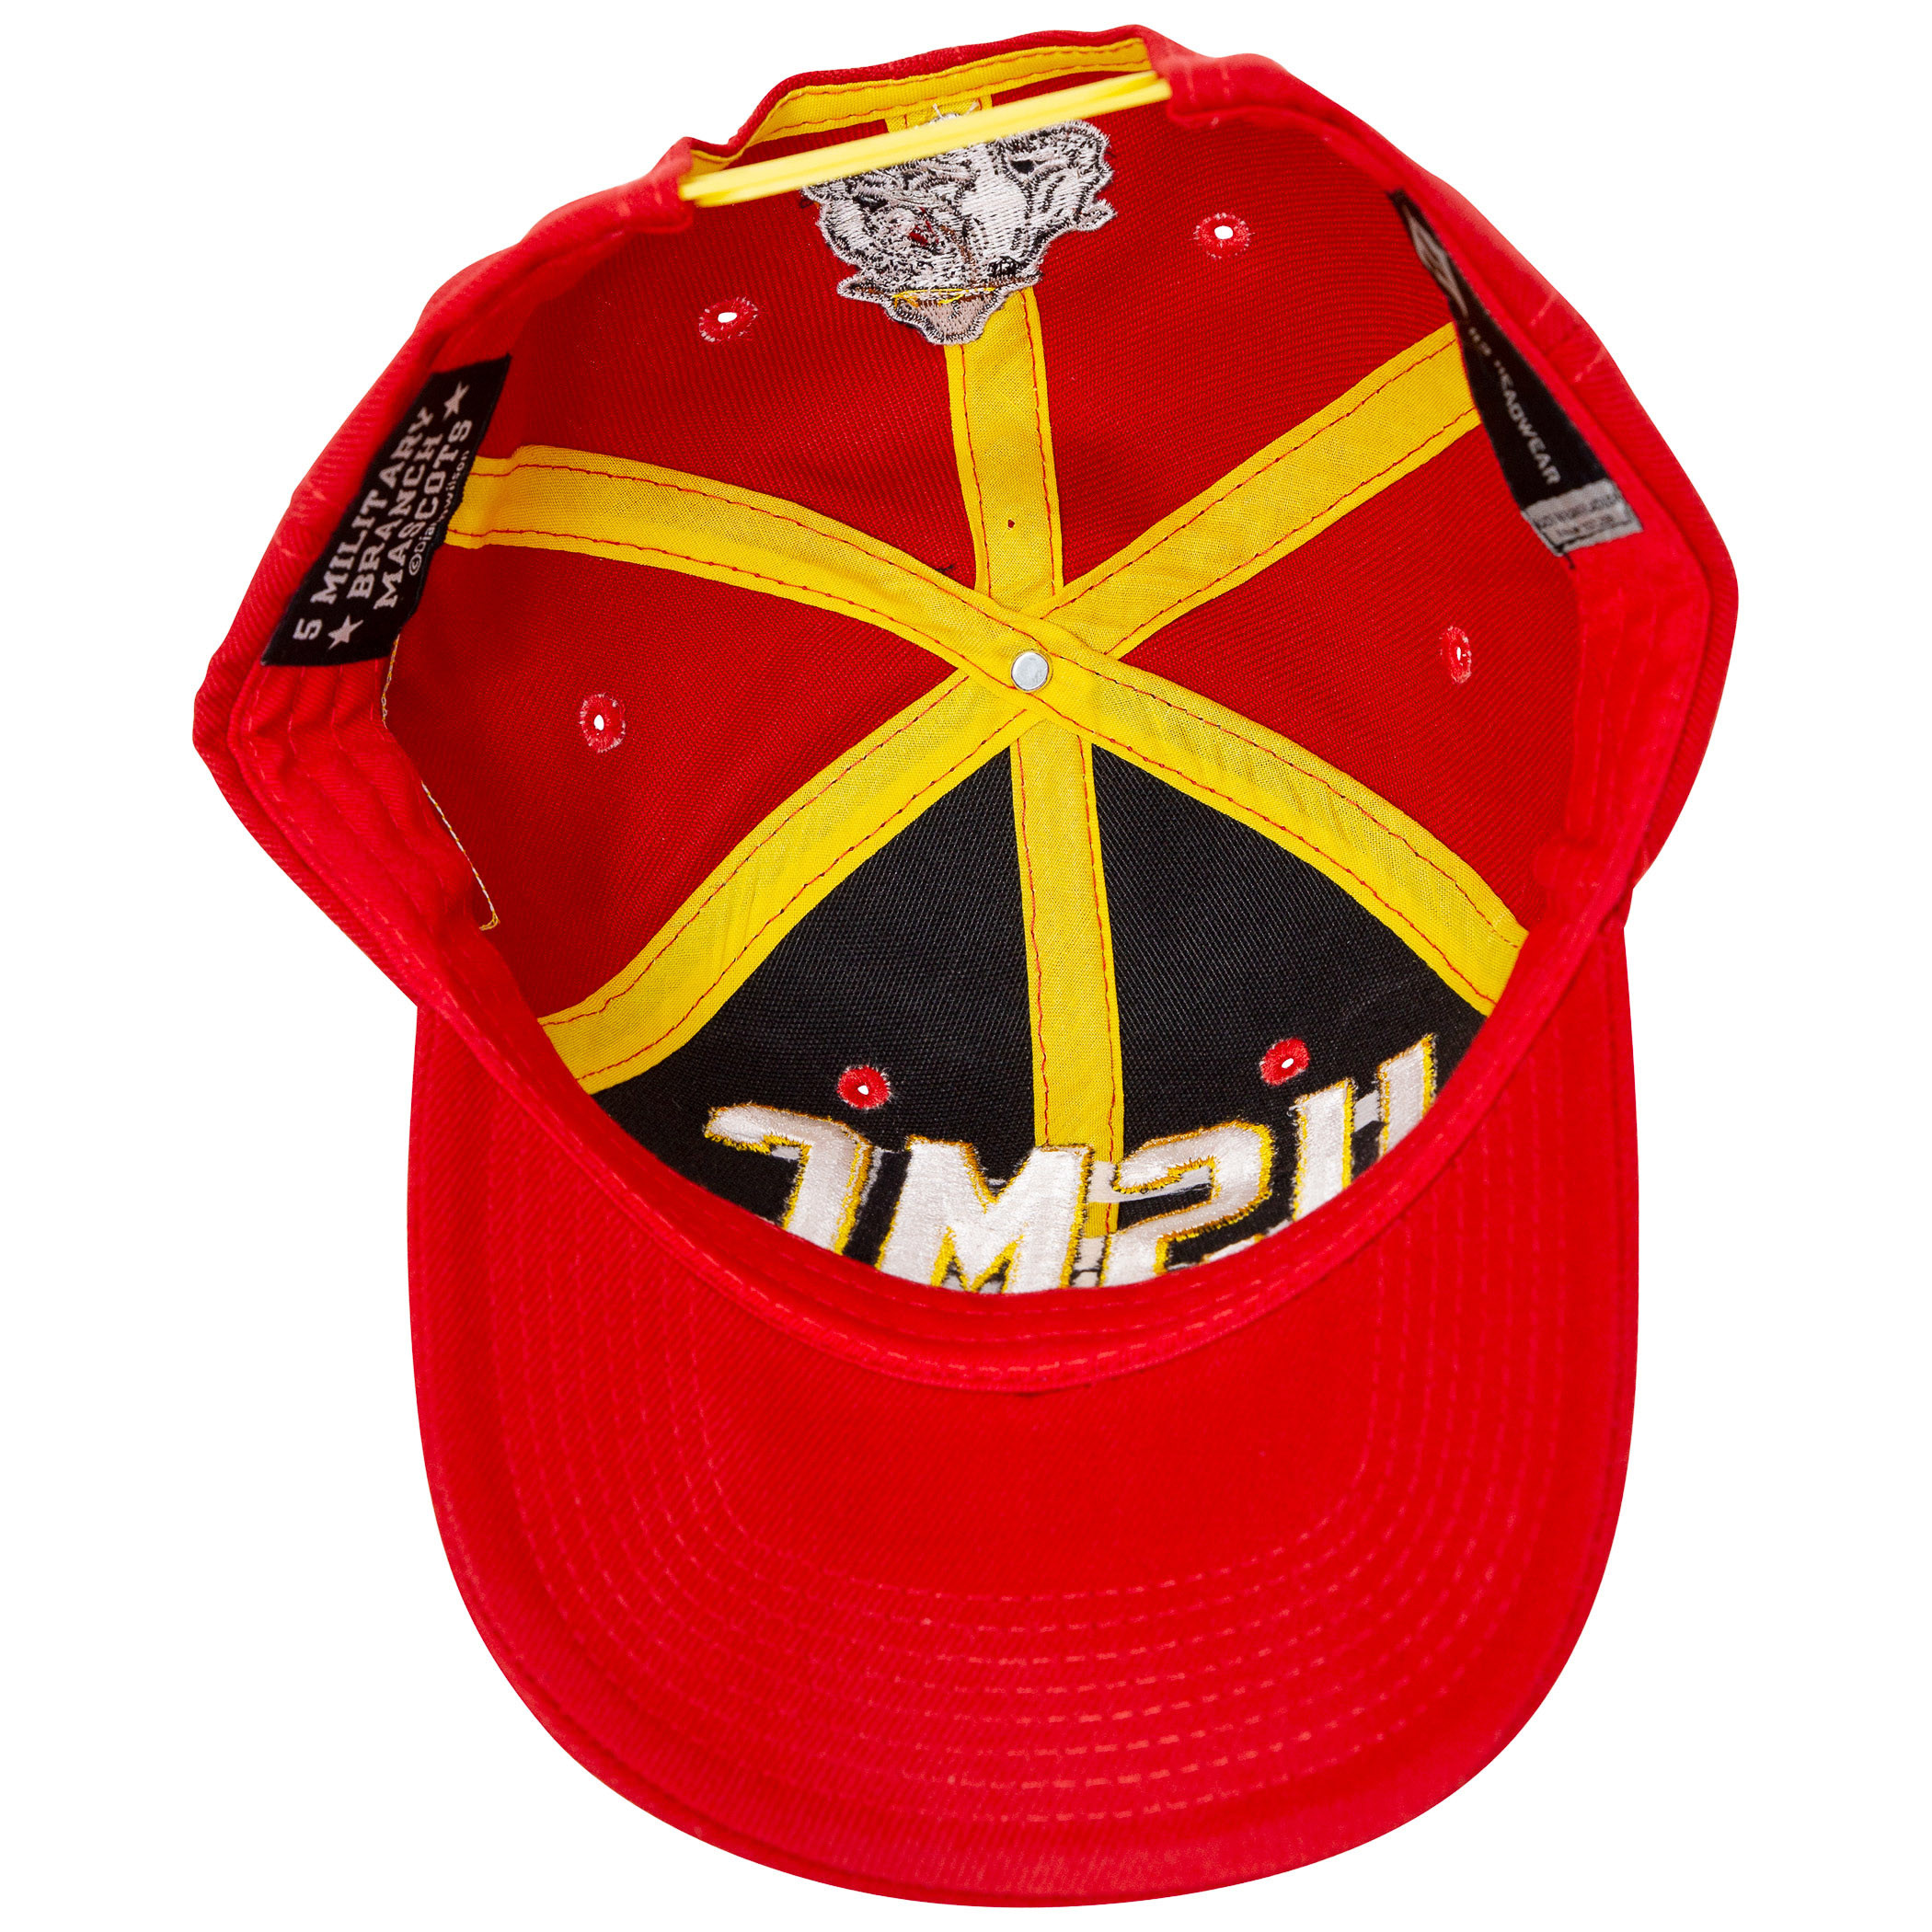 USMC Adjustable Red Snapback Hat - image 5 of 5